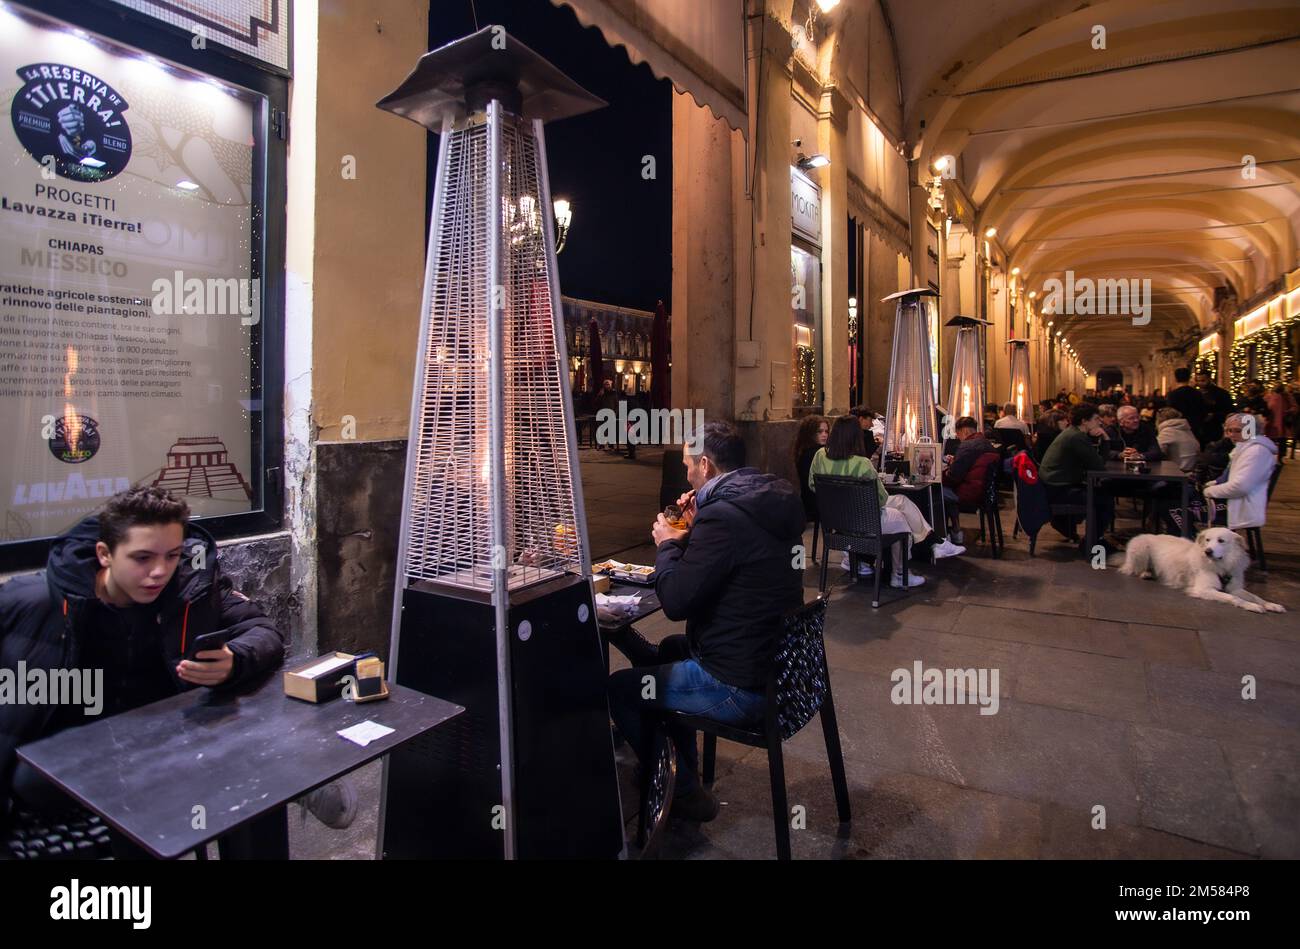 Italy Piedmont Turin Piazza San Carlo - People under arcade Stock Photo